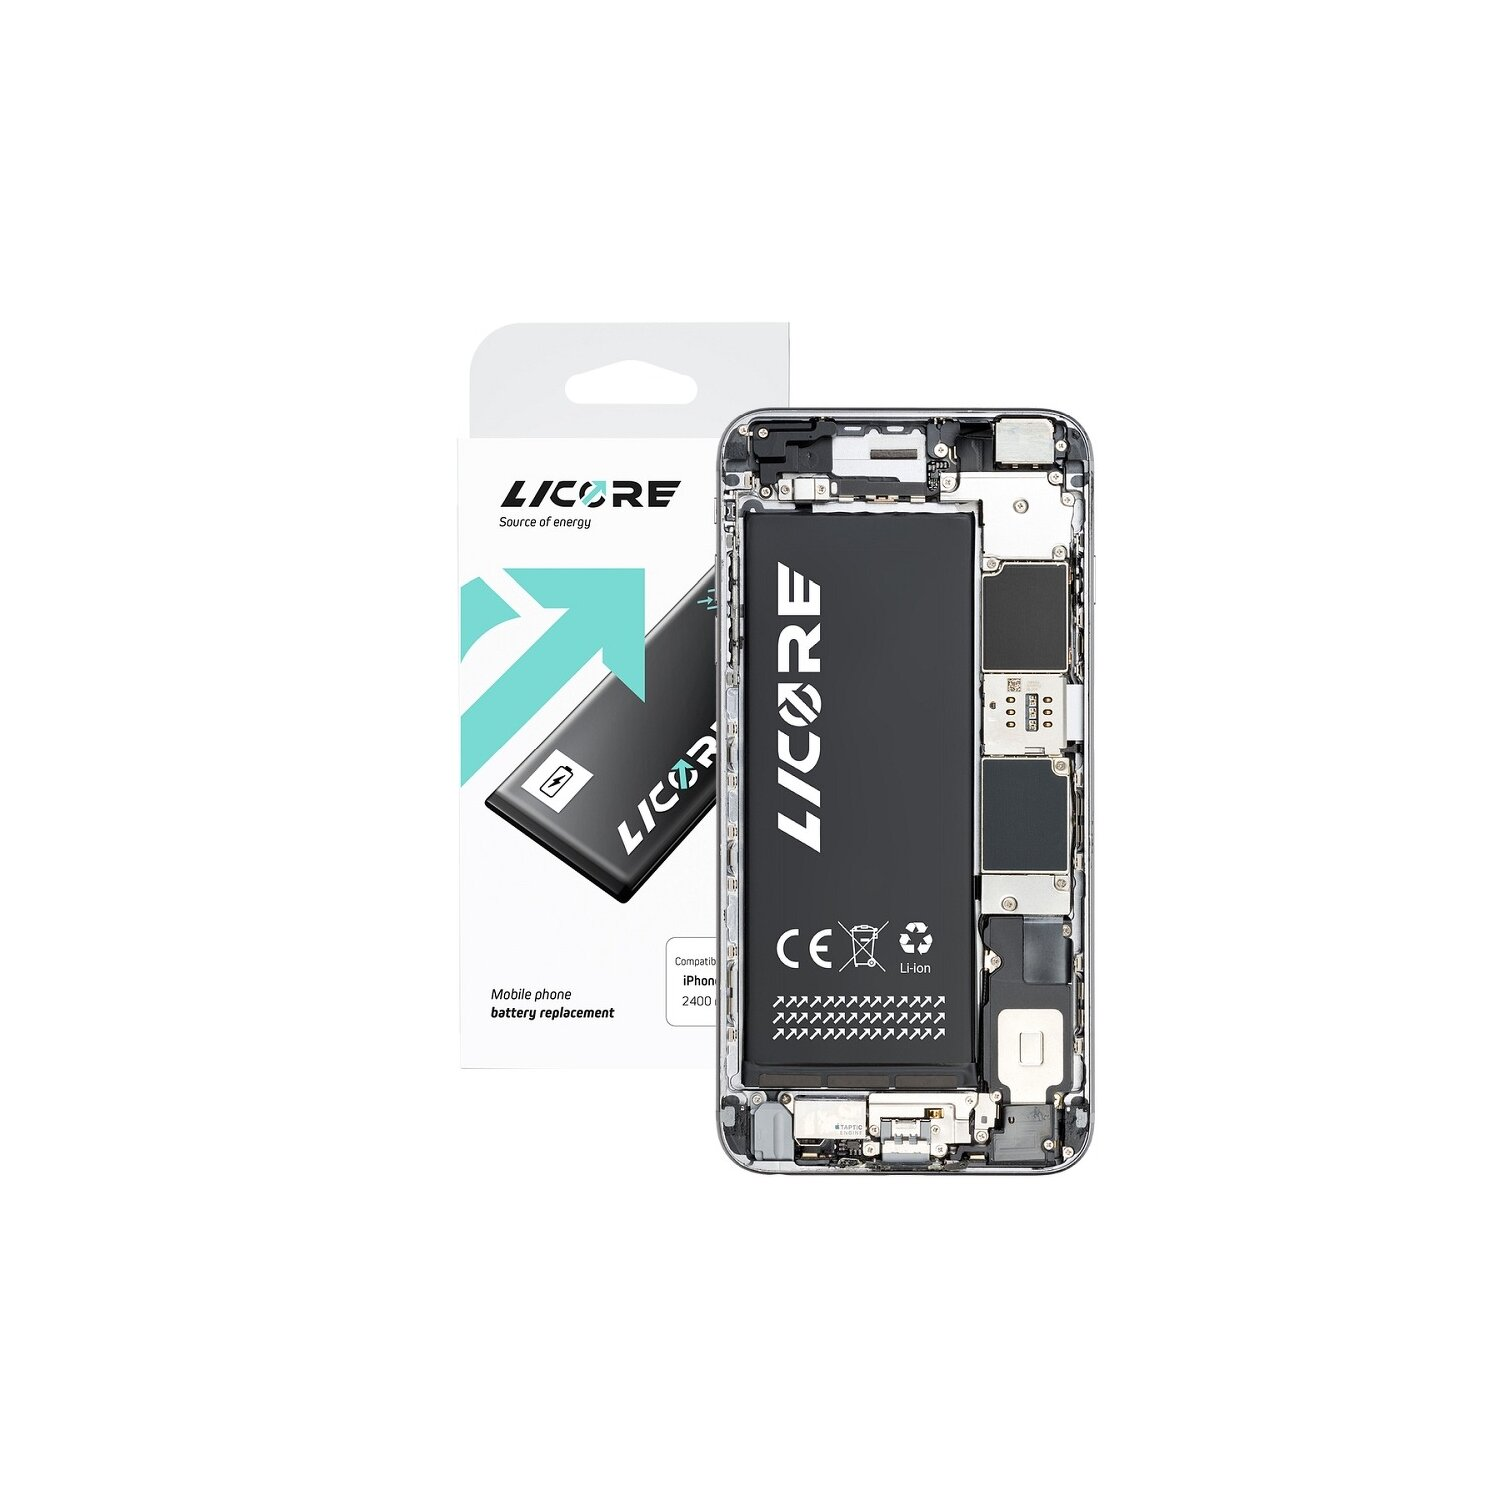 COFI mit Akku 1430mAh Licore li-Ion iPhone Ersatz 4s kompatibel Akku